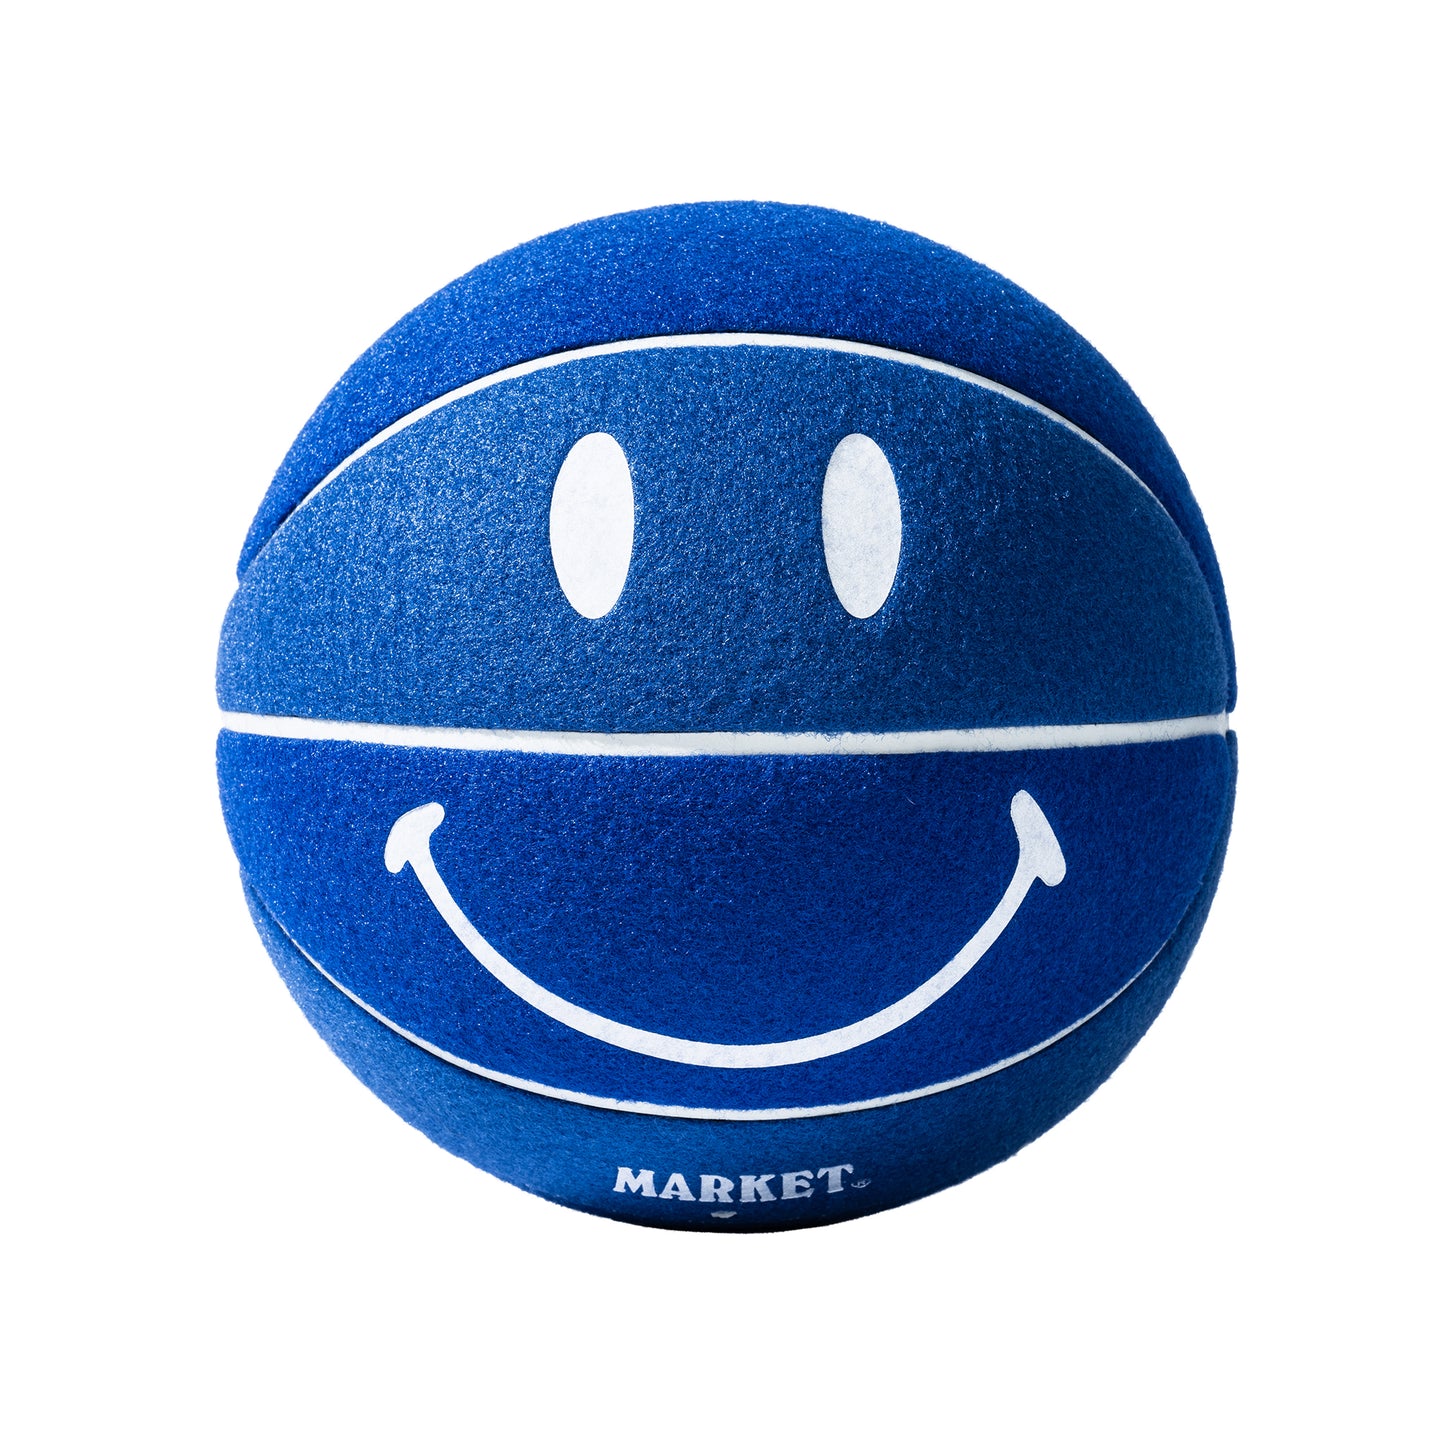 SMILEY MADRID TENNIS BASKETBALL